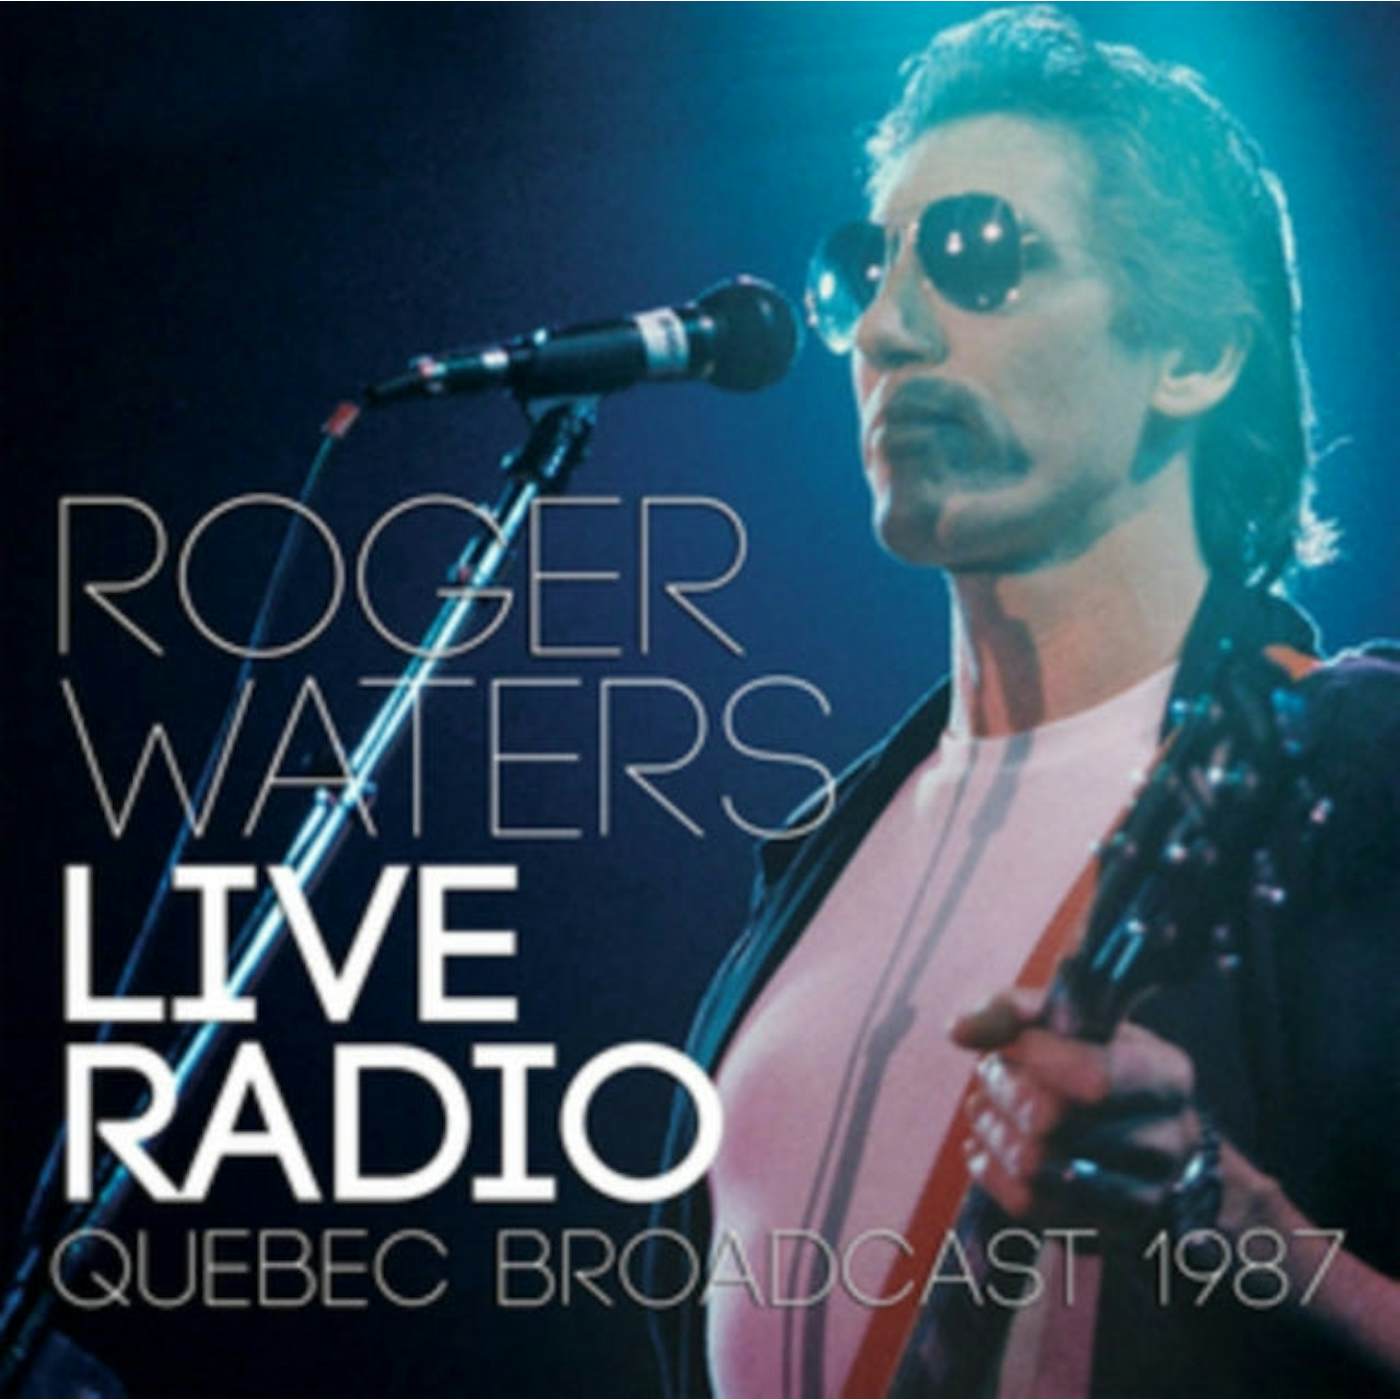 Roger Waters CD - Live Radio